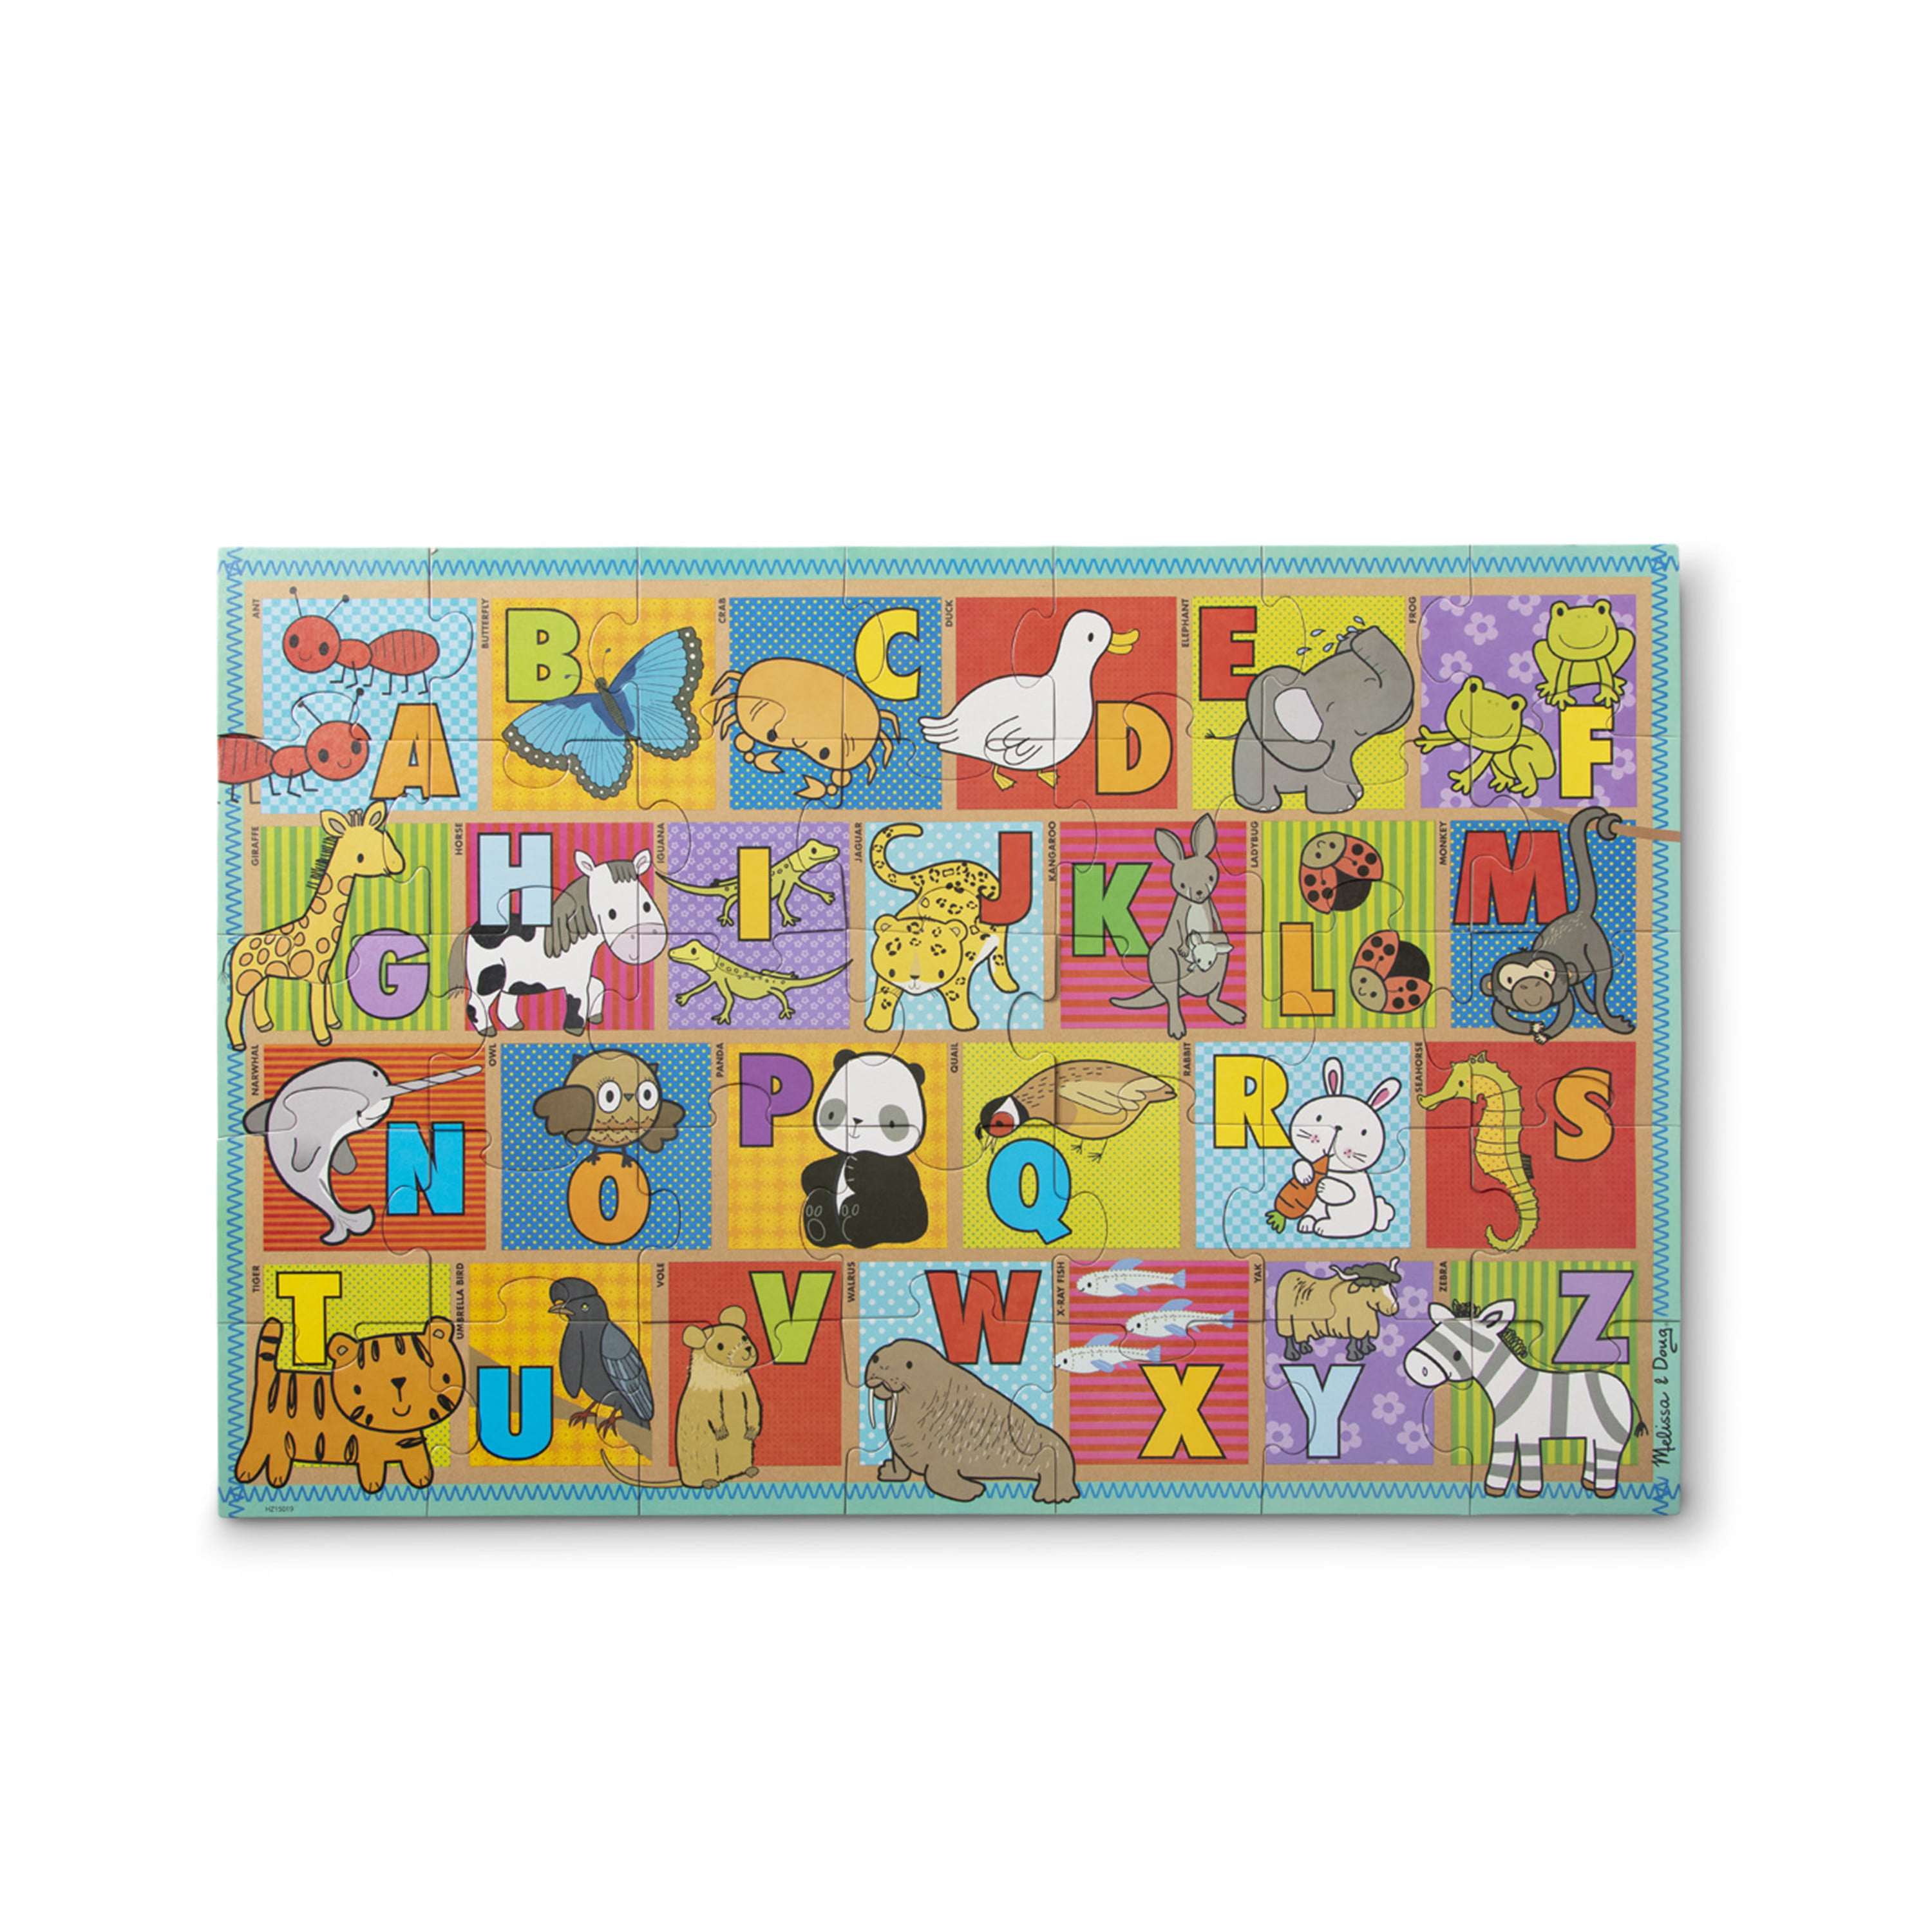 ABC Animals 35 pieces #31373 NEW Melissa and Doug Giant Floor Puzzle 